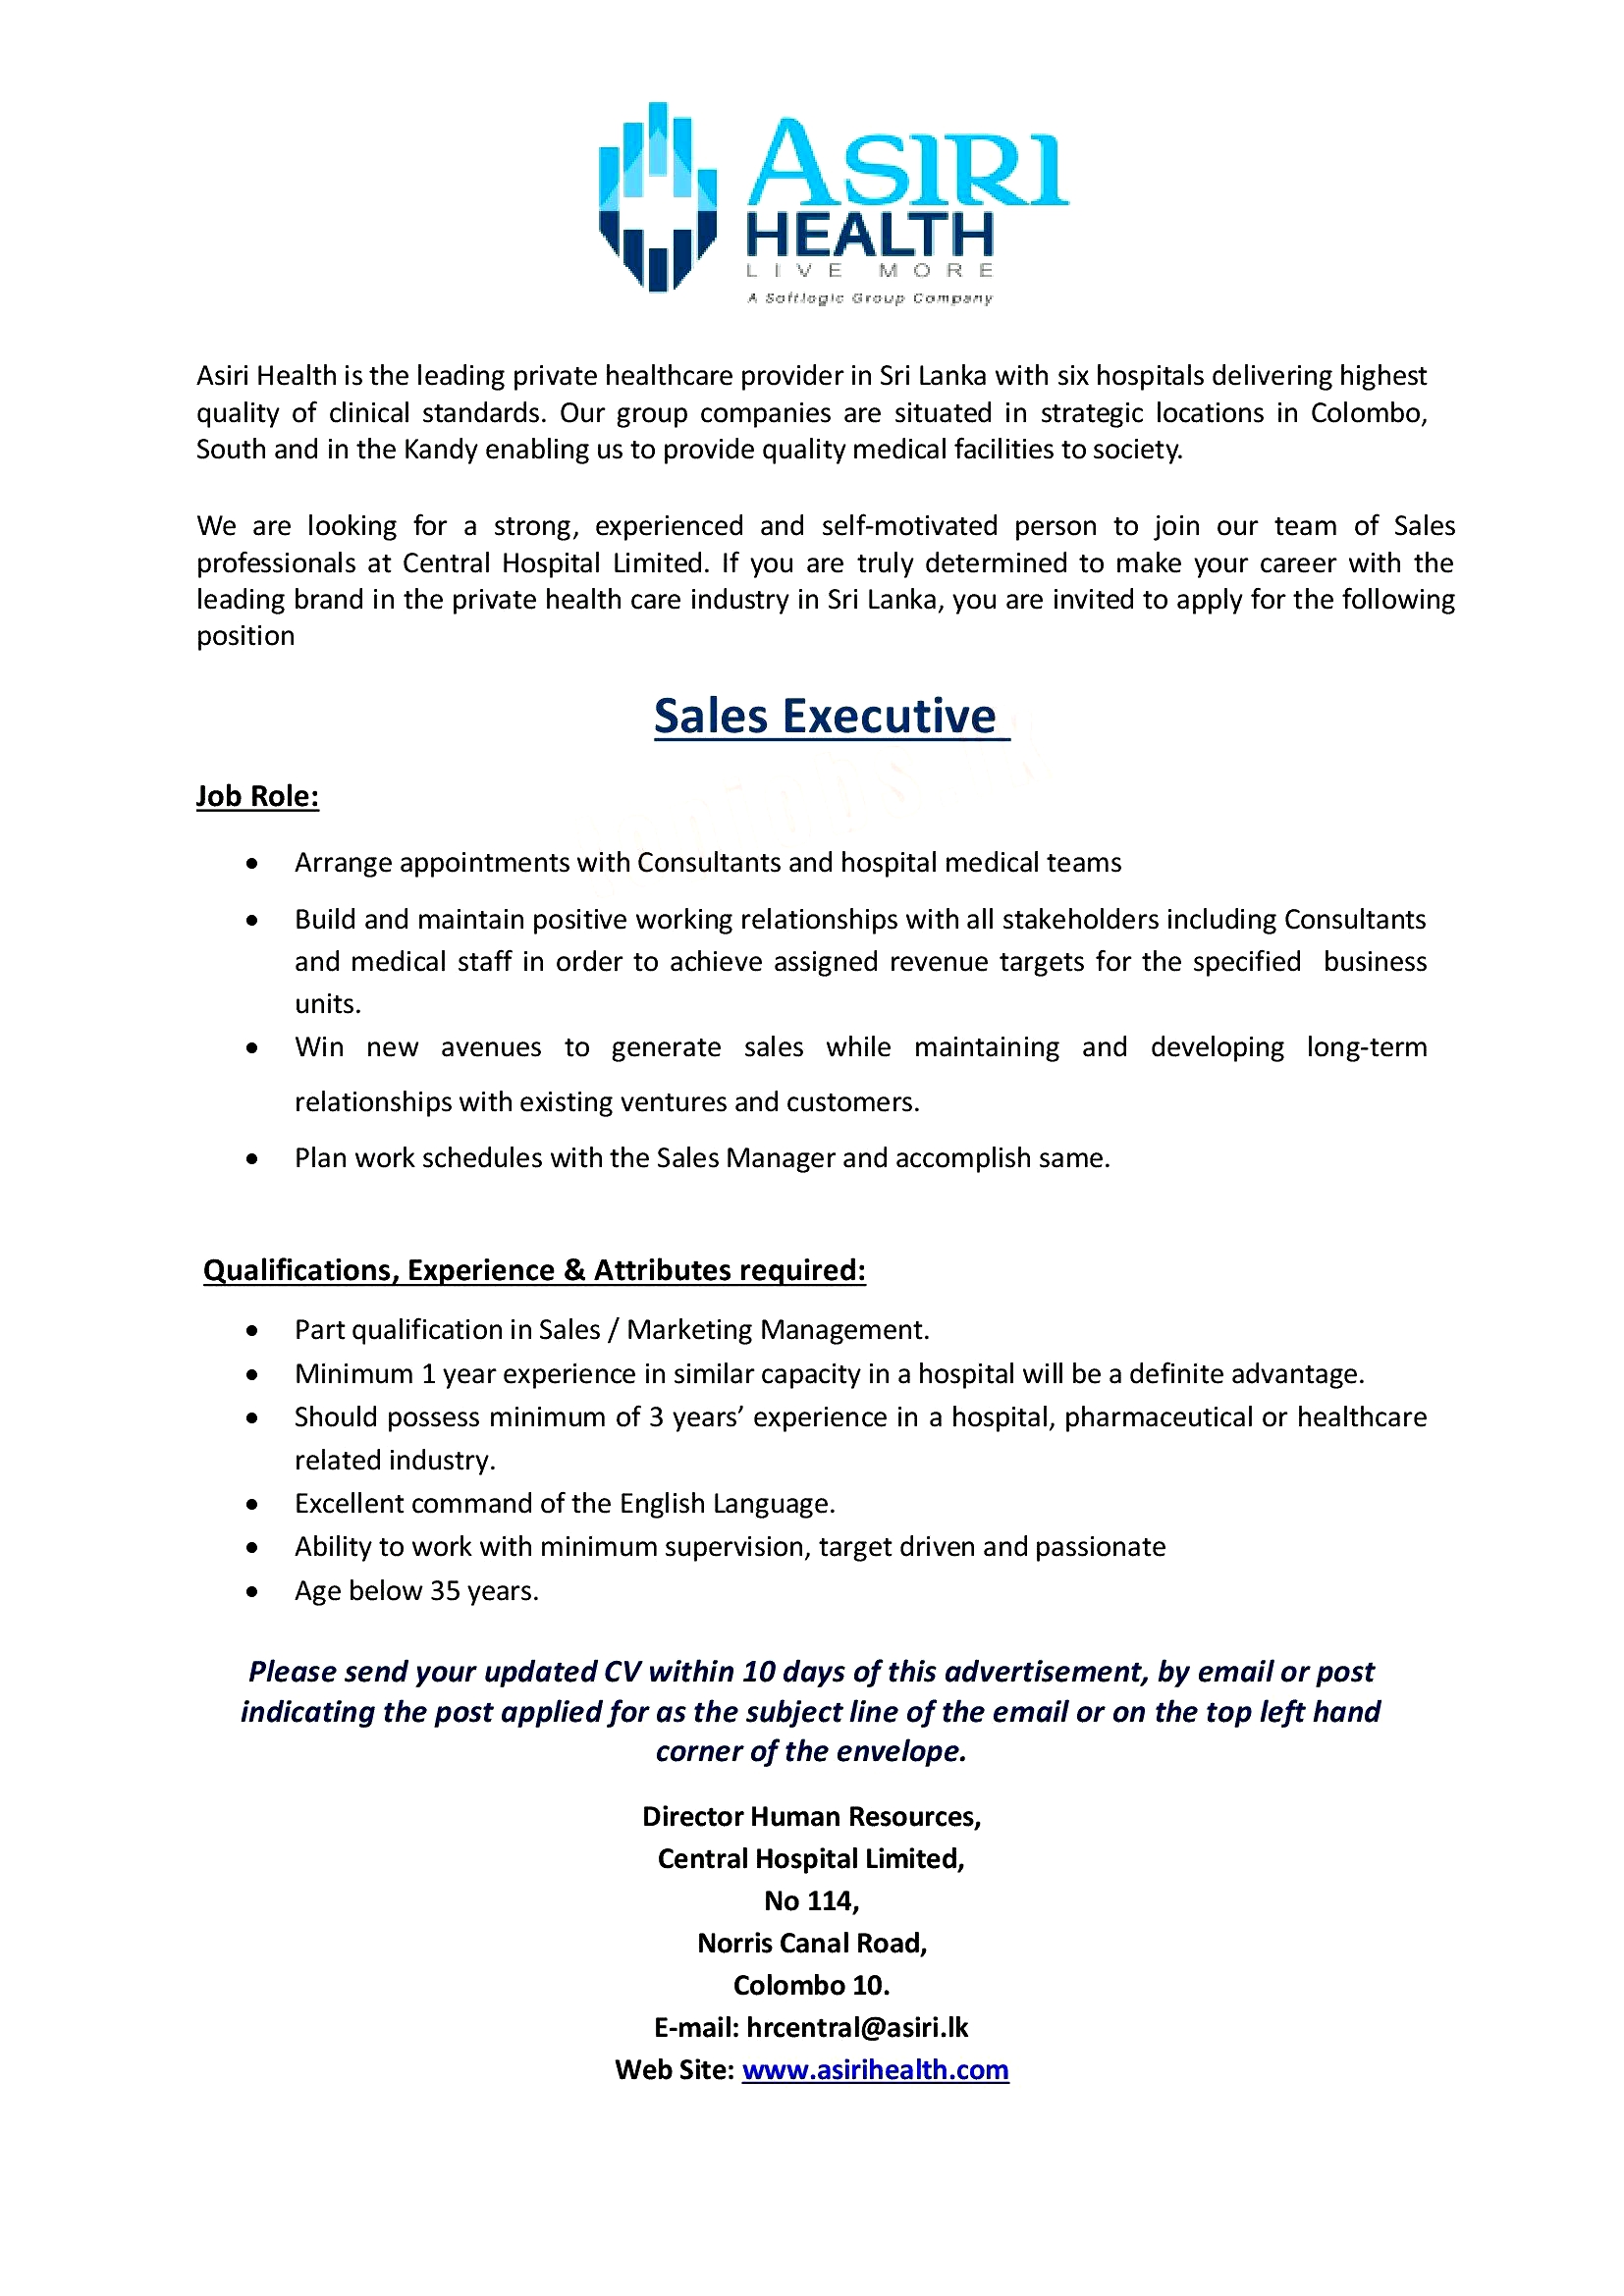 Sales Executive Jobs Vacancies – Asiri Hospital Sri Lanka Job Vacancy Details